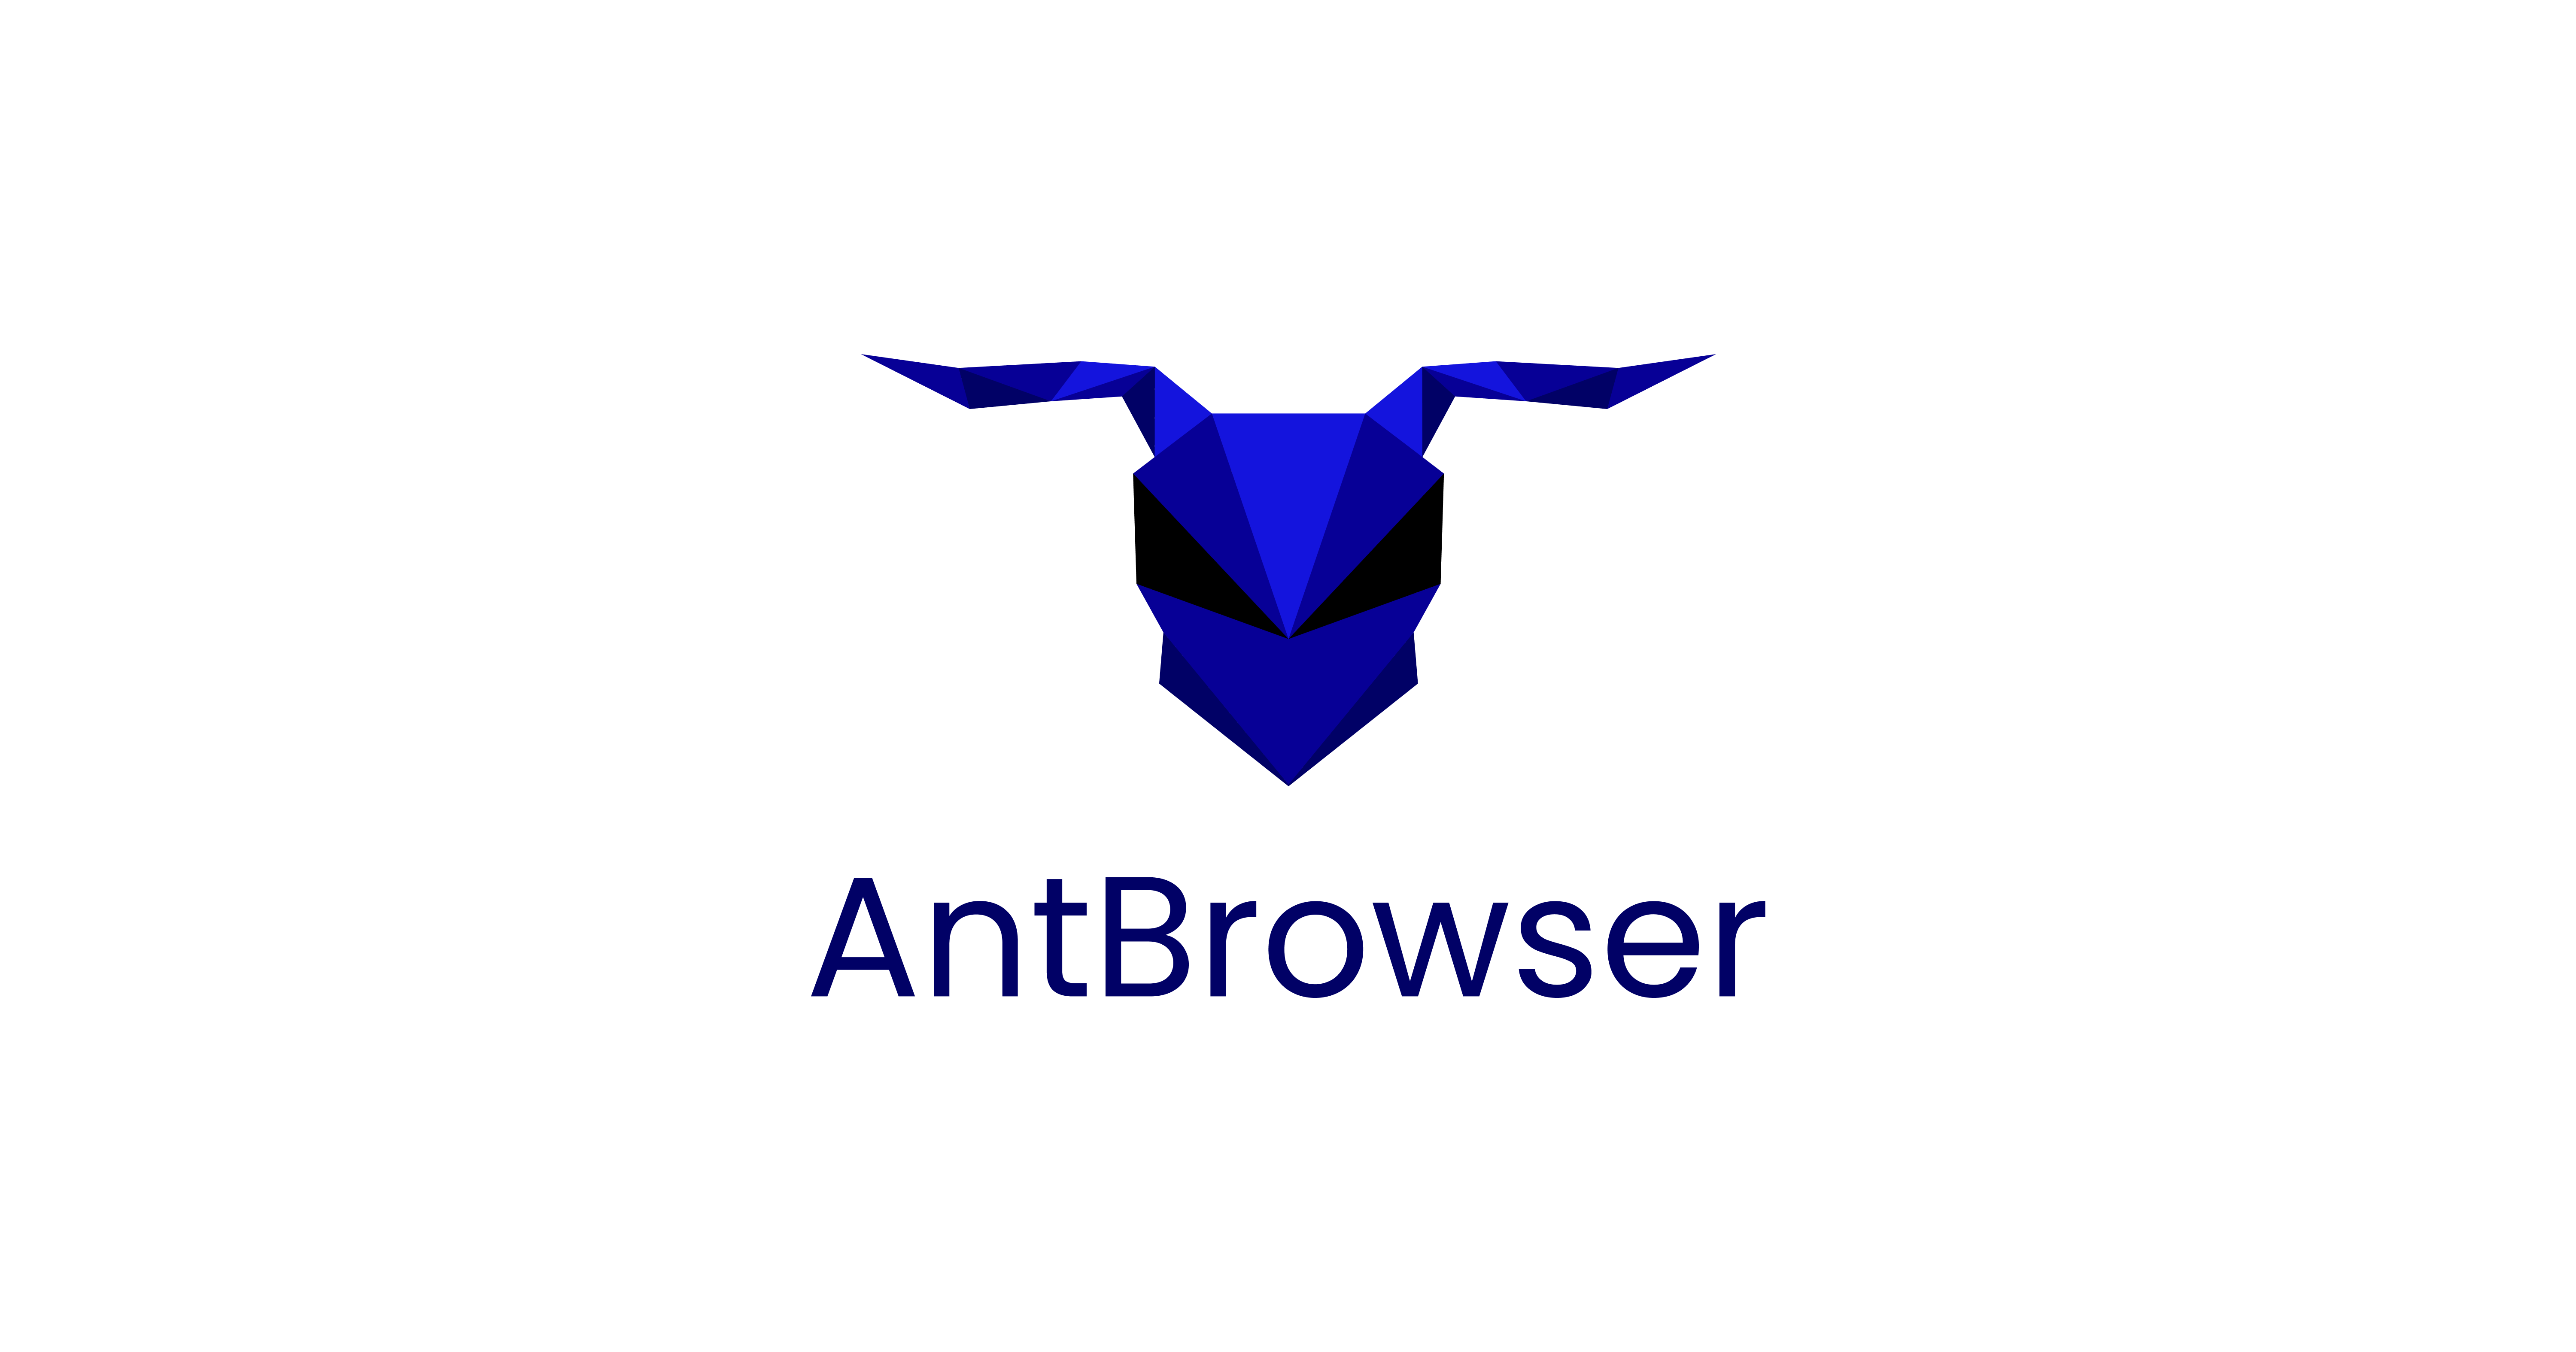 antbrowser logo